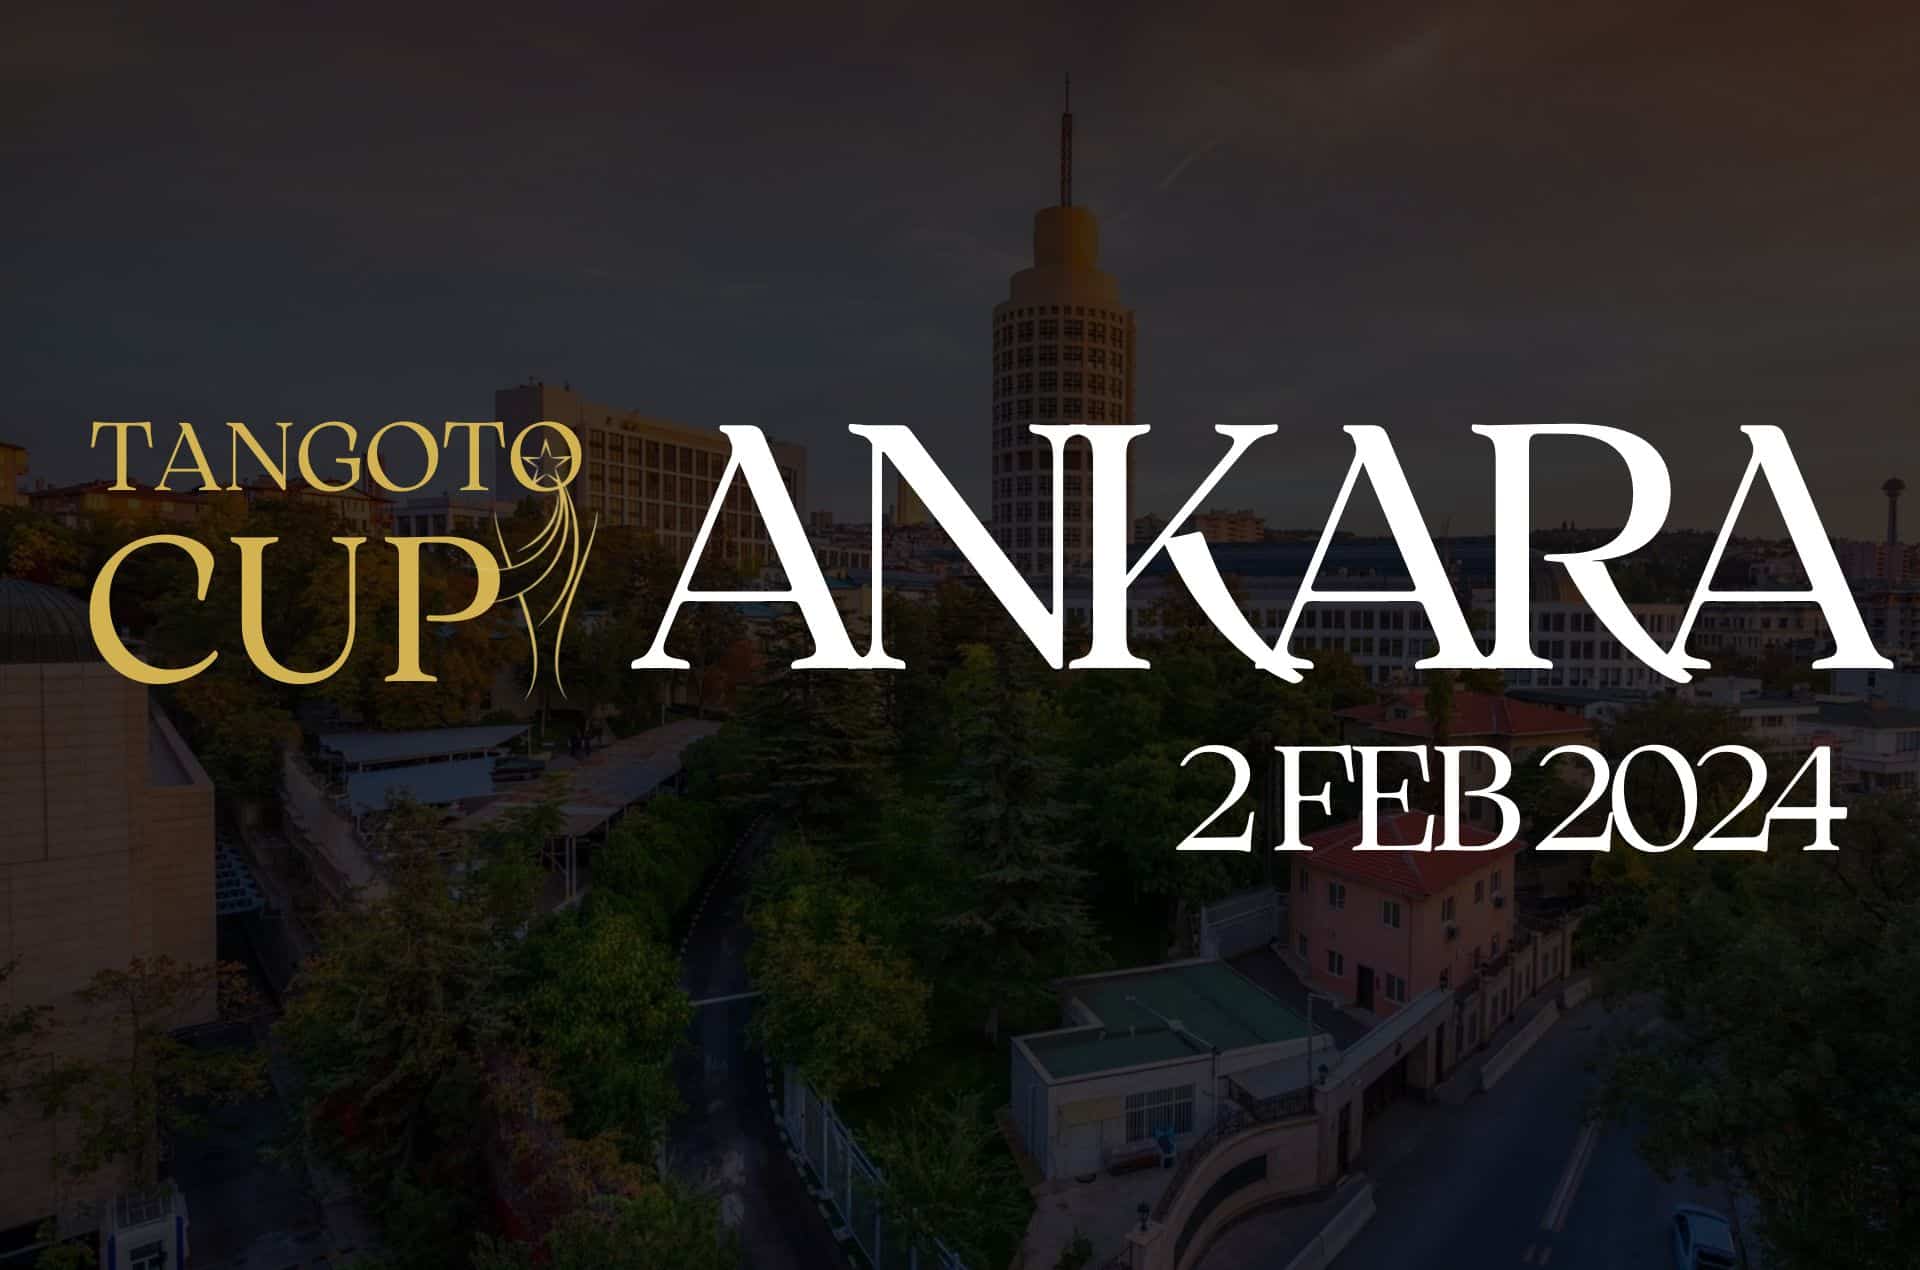 Tango To Cup Ankara 2024